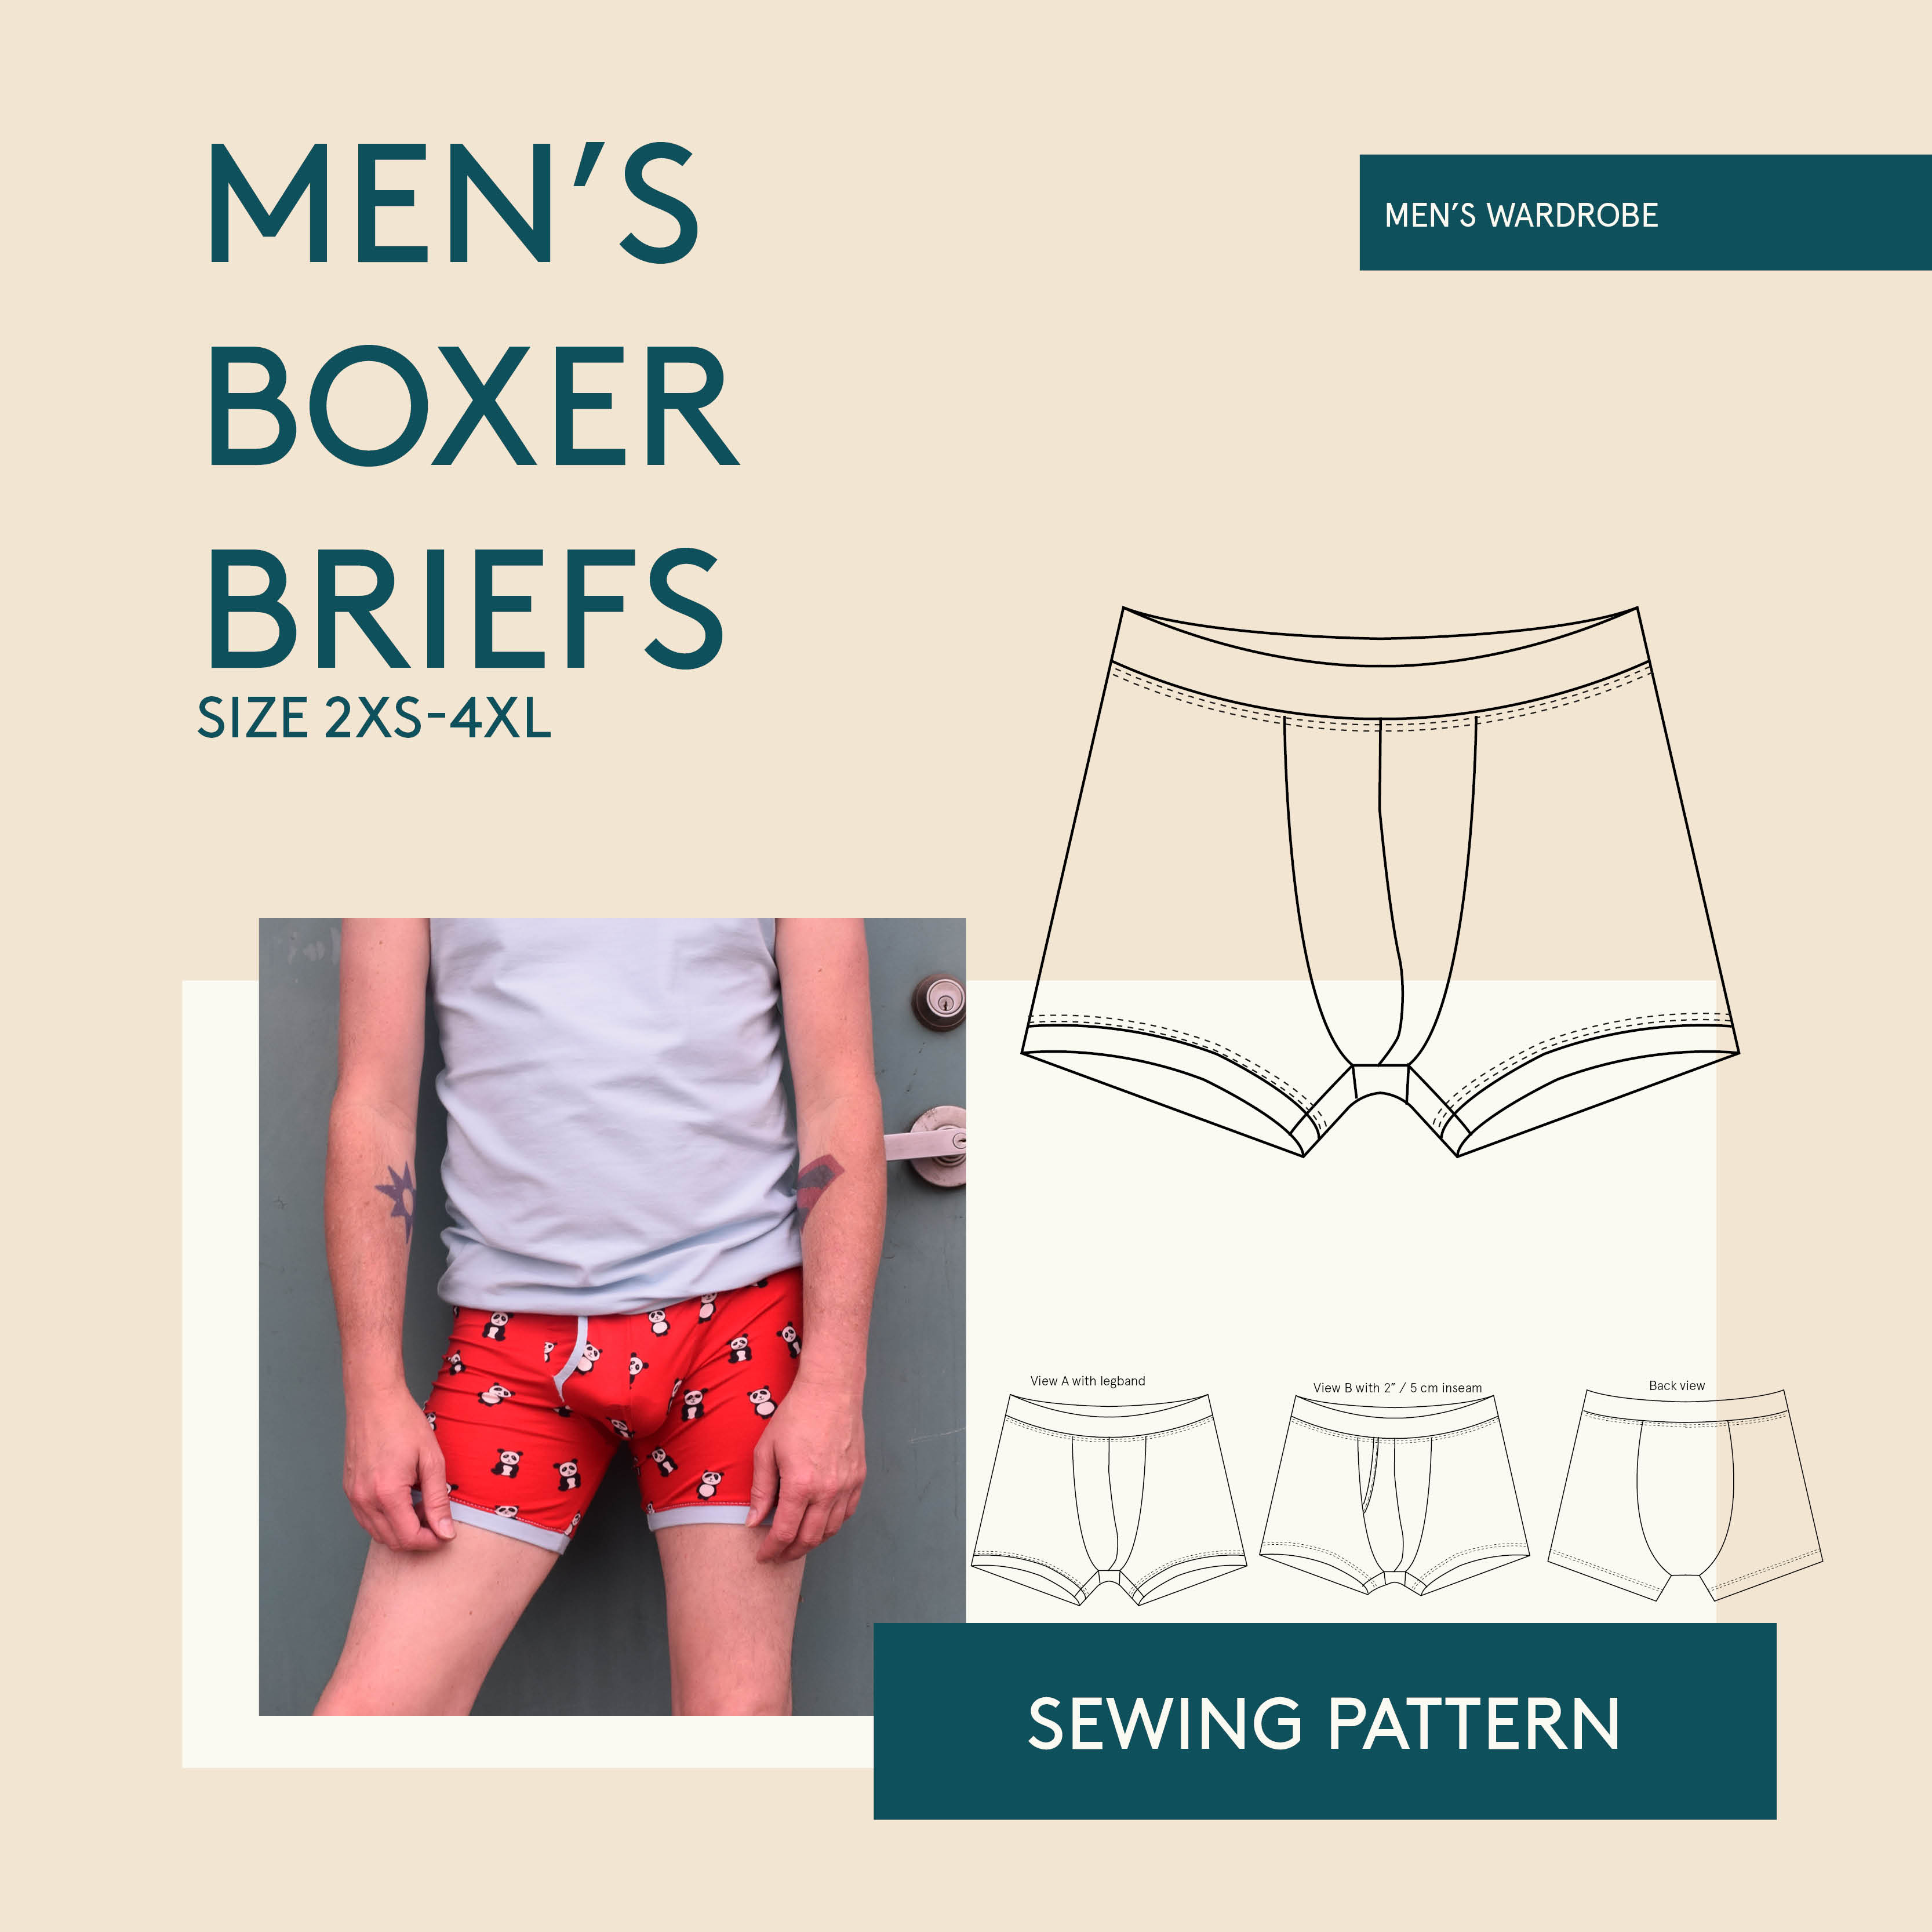 https://images.patternreview.com/sewing/patterns/wbm/men/briefs/briefs.jpg